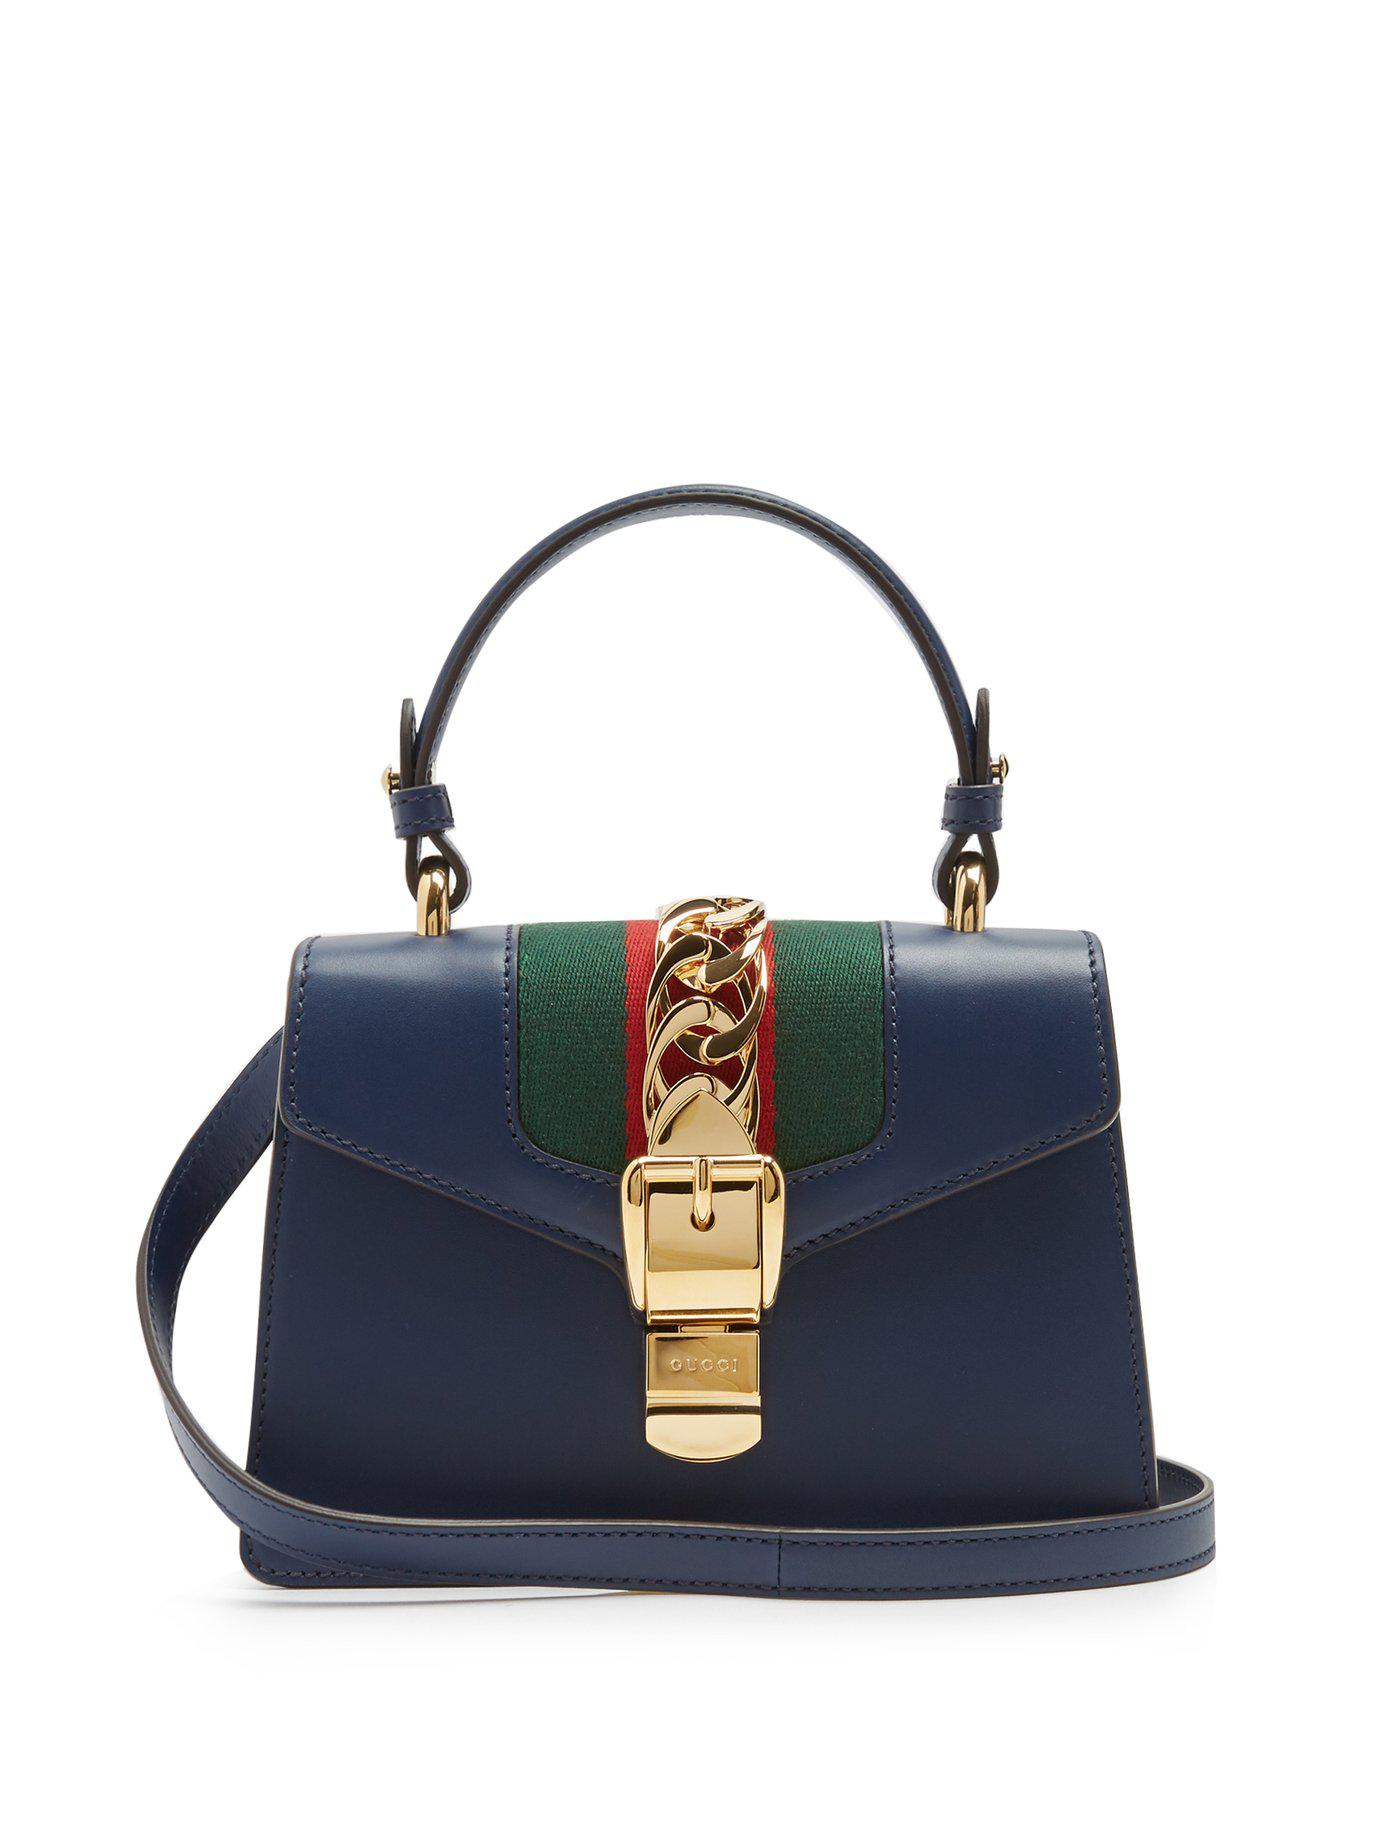 Gucci Sylvie Mini Leather Shoulder Bag in Dark Blue (Blue) - Lyst